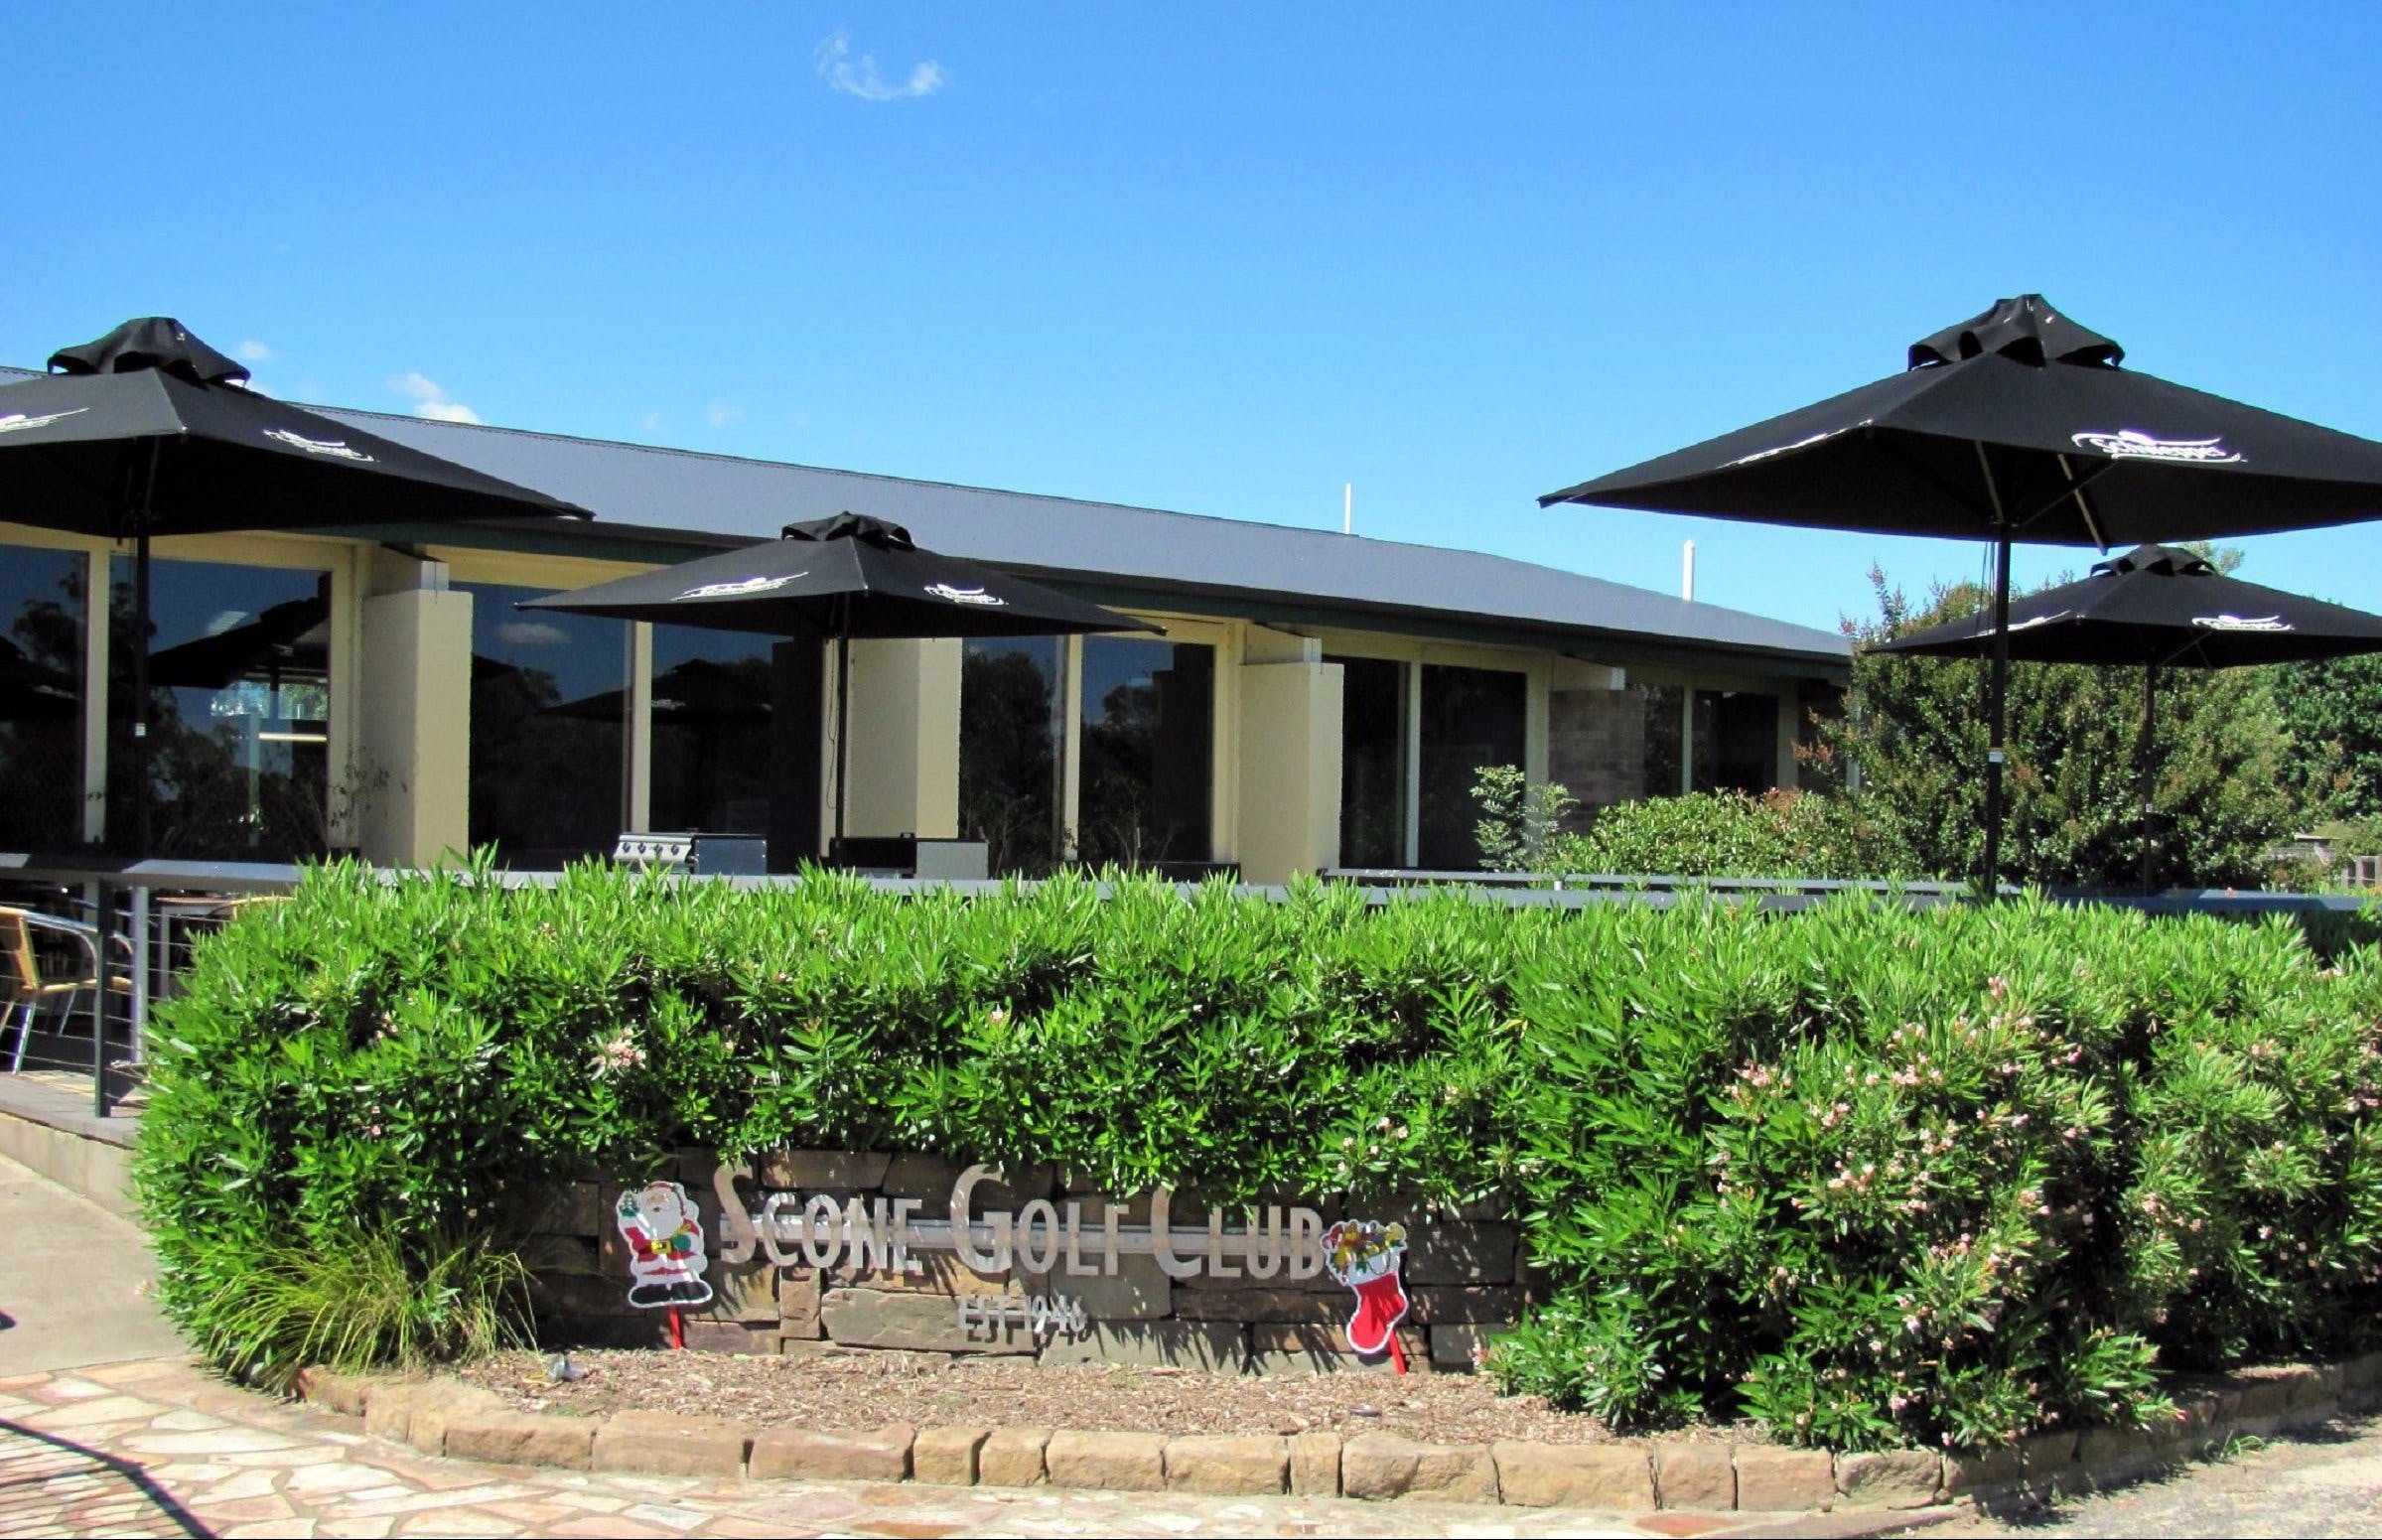 Scone Golf Club - Geraldton Accommodation